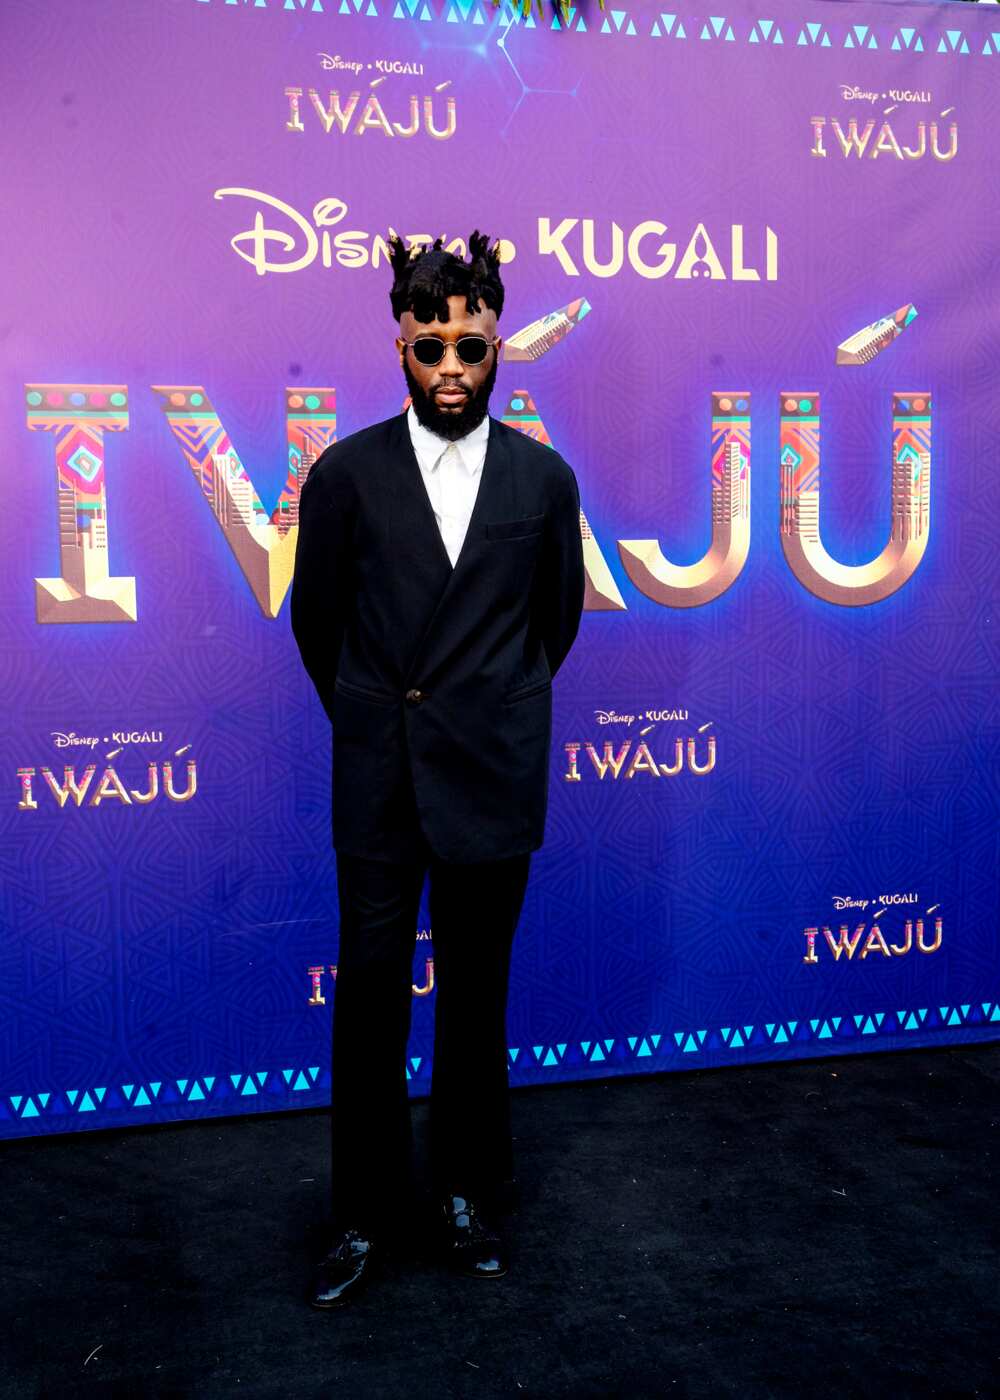 Disney Animation/Kugali New Series “Iwájú” Makes its World Premiere in Lagos, Nigeria